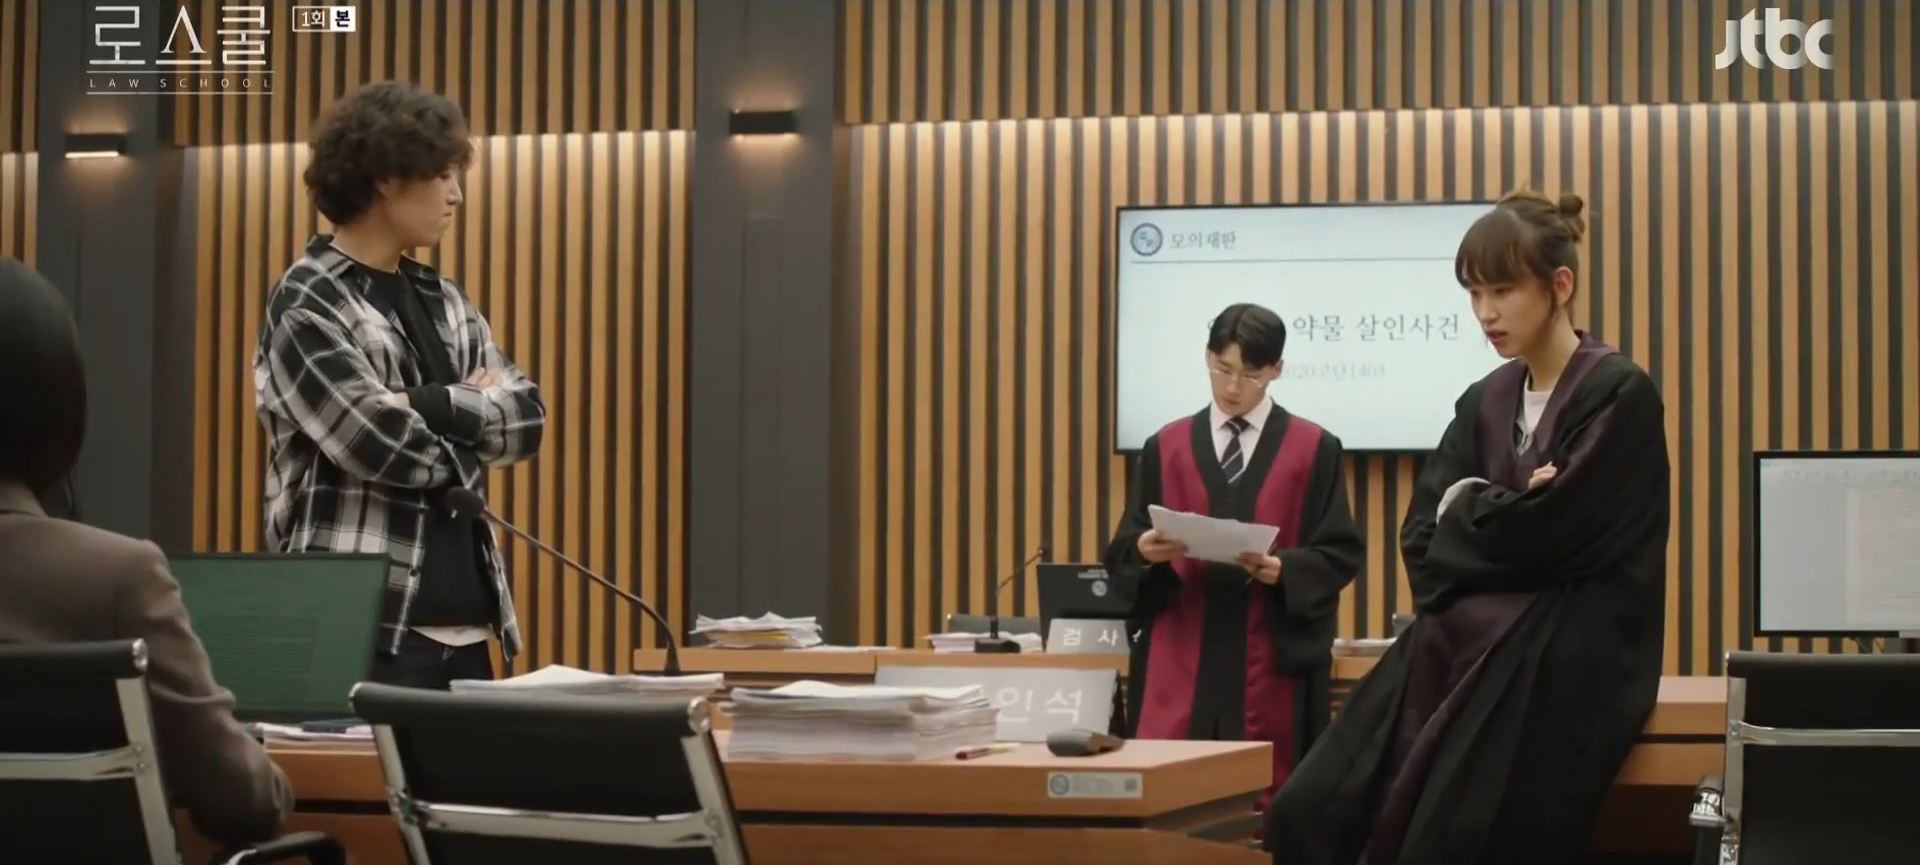 law school korean drama review - students